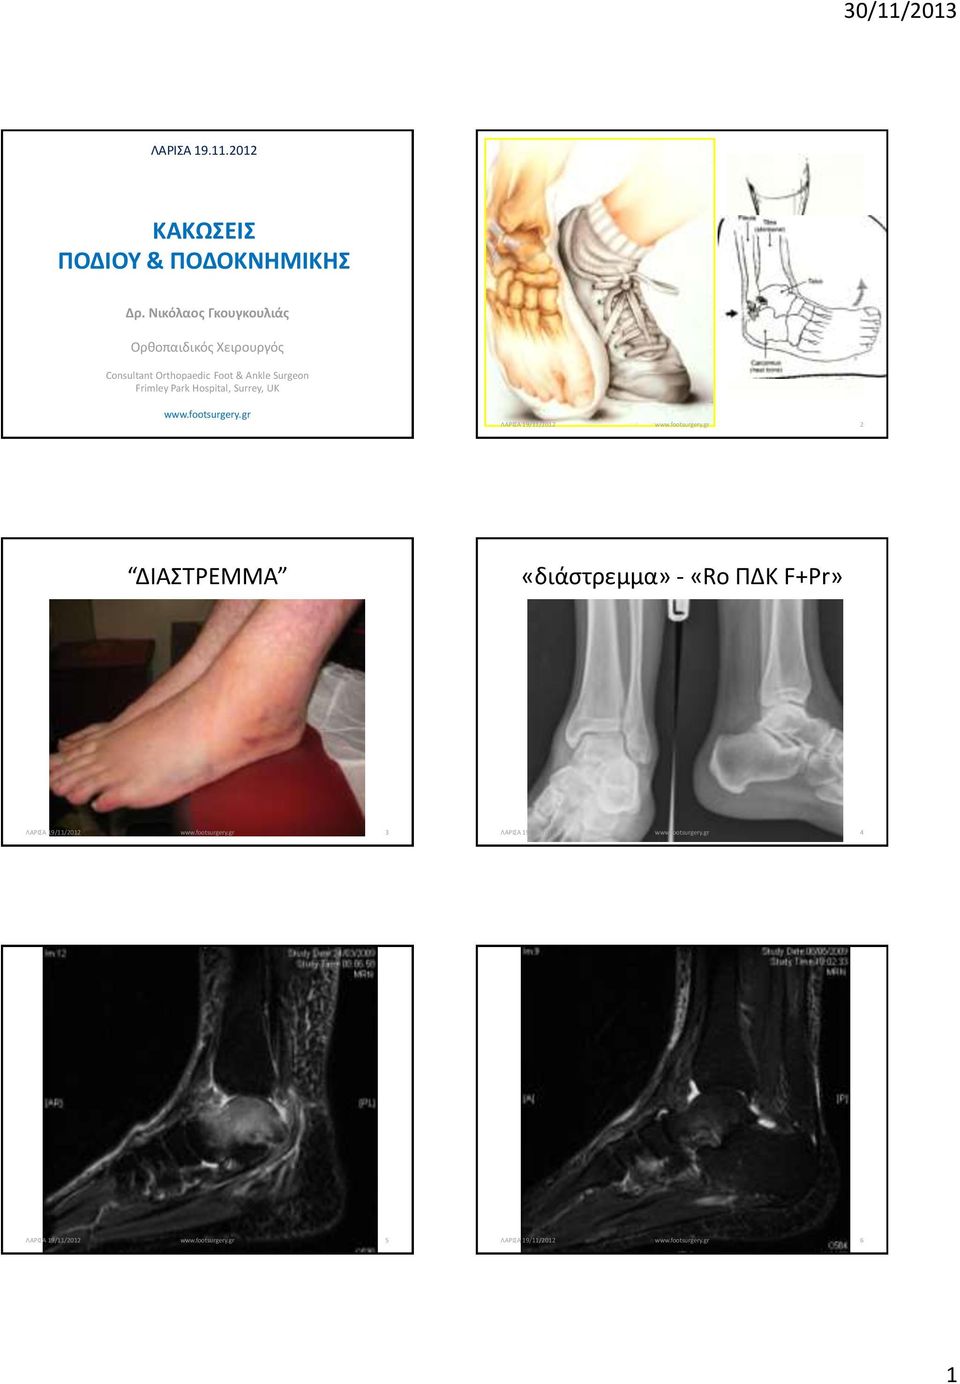 Orthopaedic Foot & Ankle Surgeon Frimley Park Hospital,